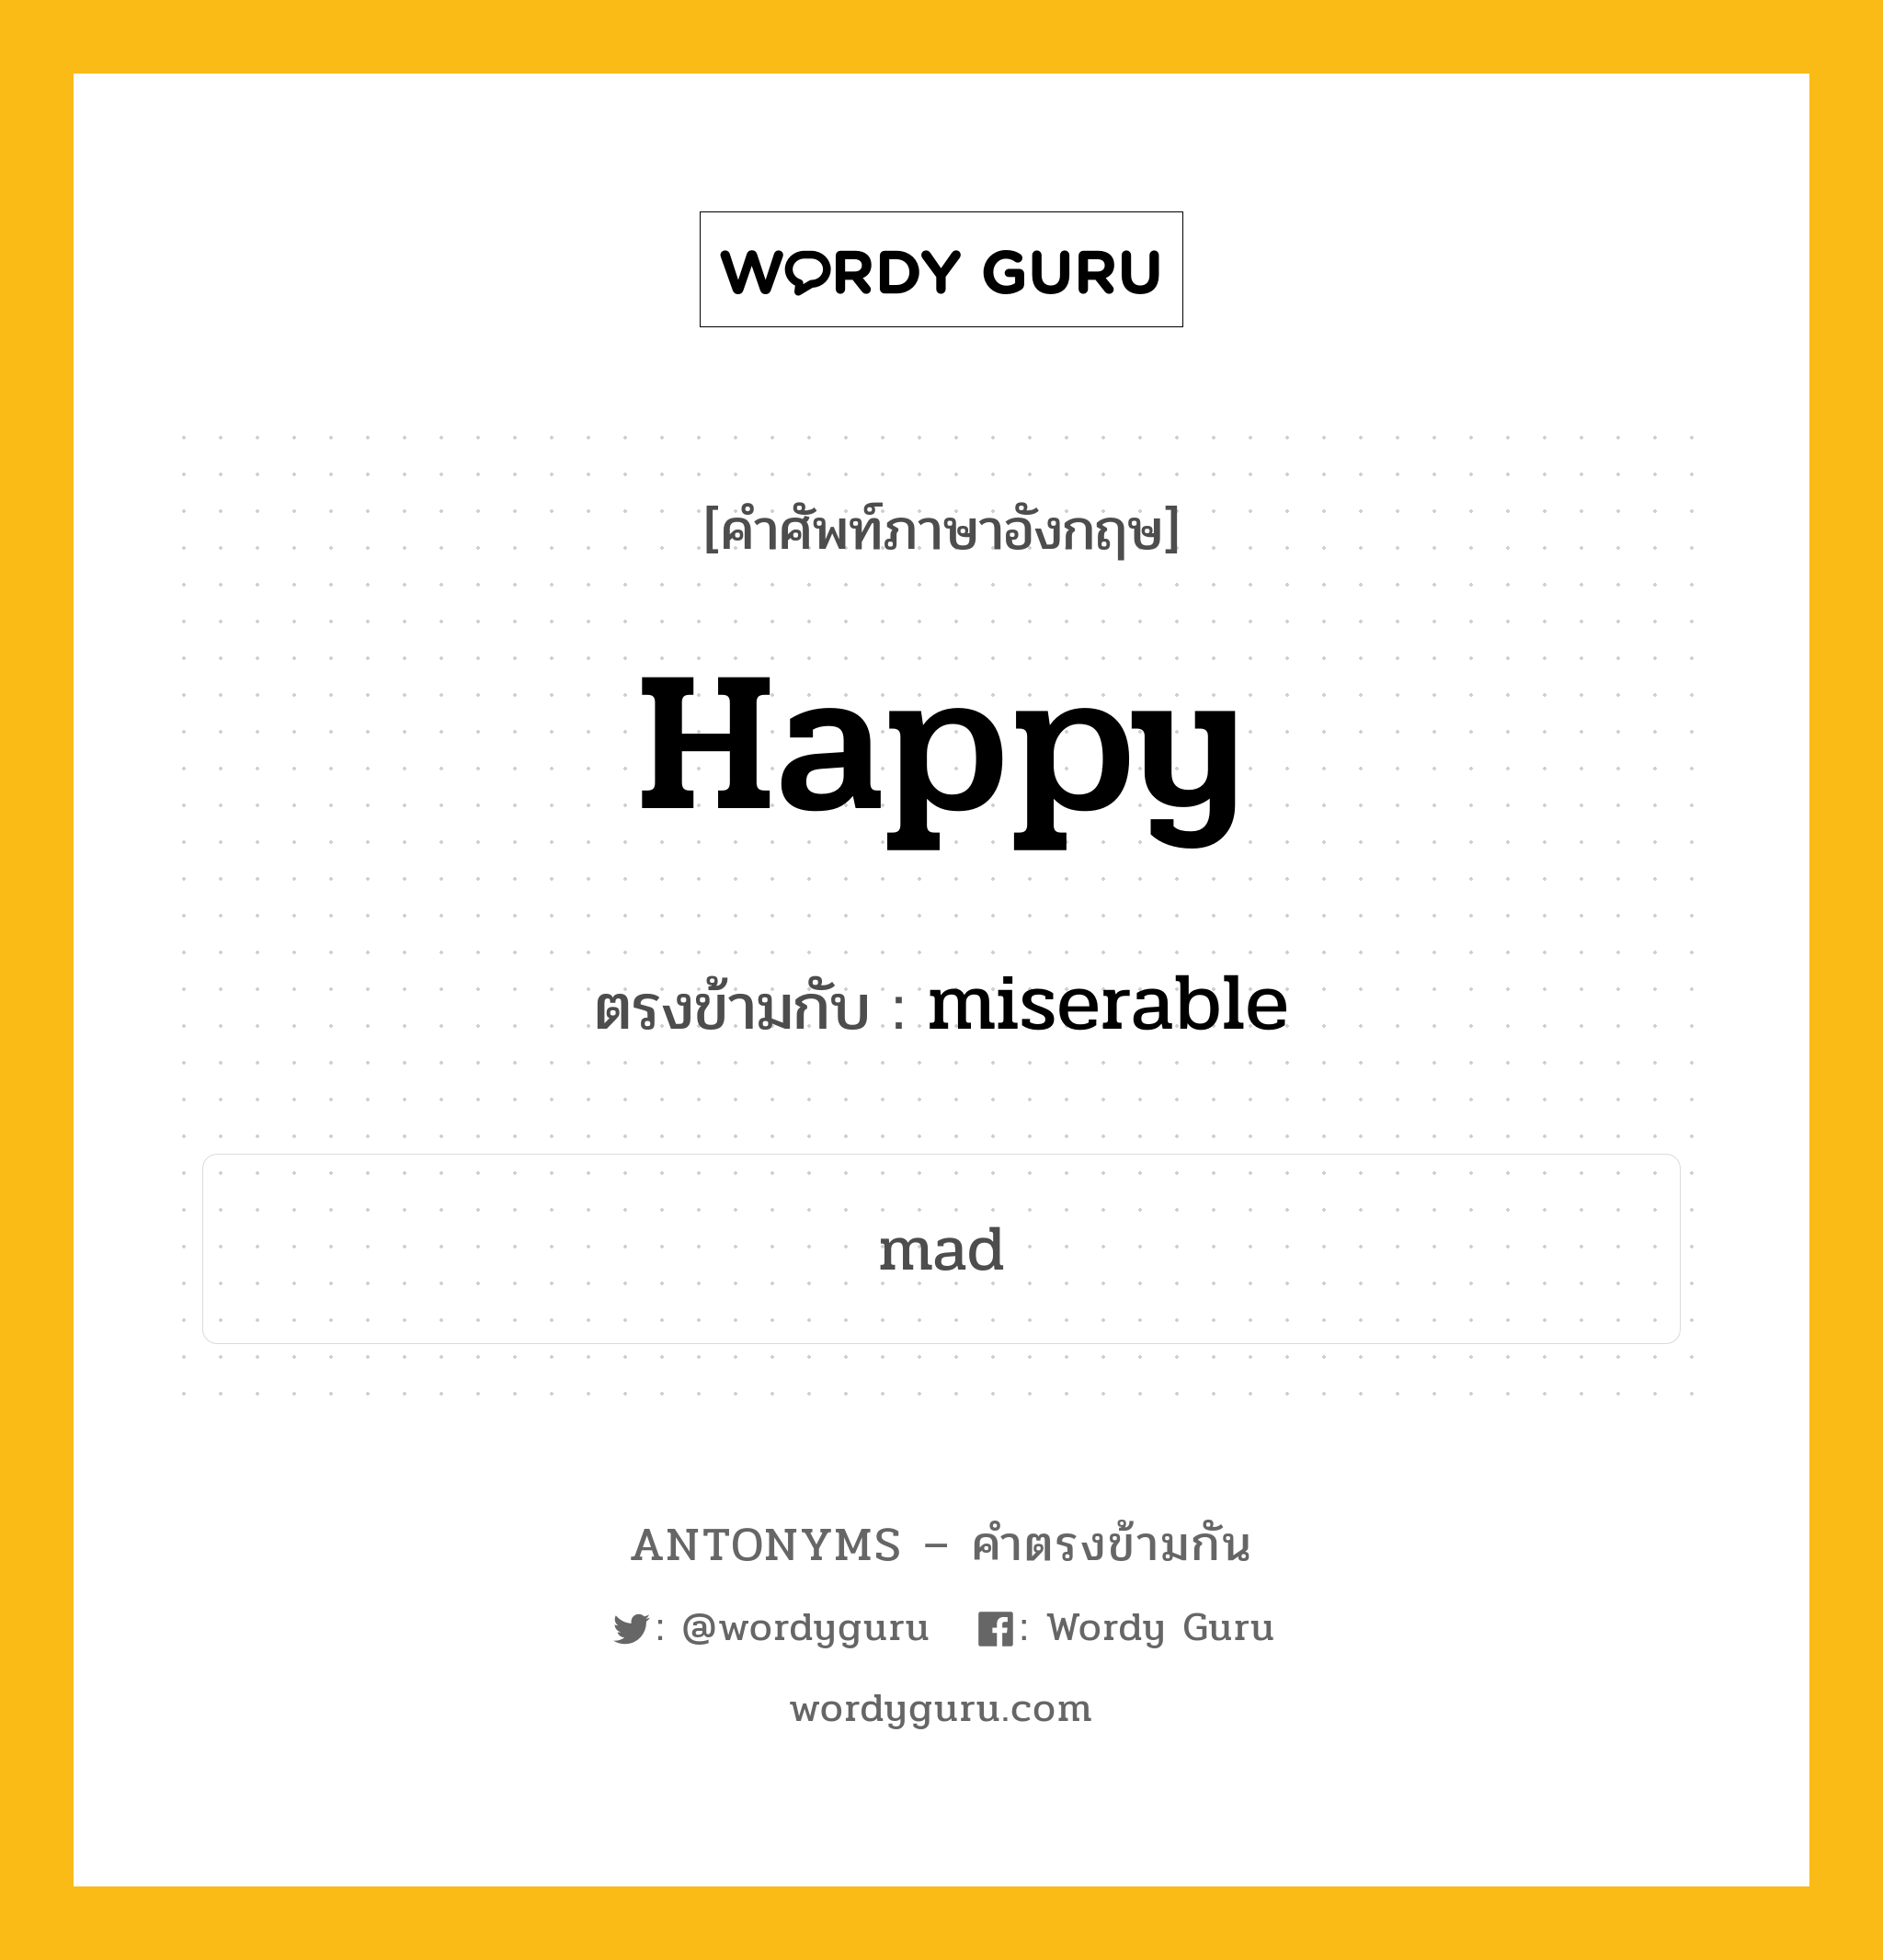 happy เป็นคำตรงข้ามกับคำไหนบ้าง?, คำศัพท์ภาษาอังกฤษ happy ตรงข้ามกับ miserable หมวด miserable